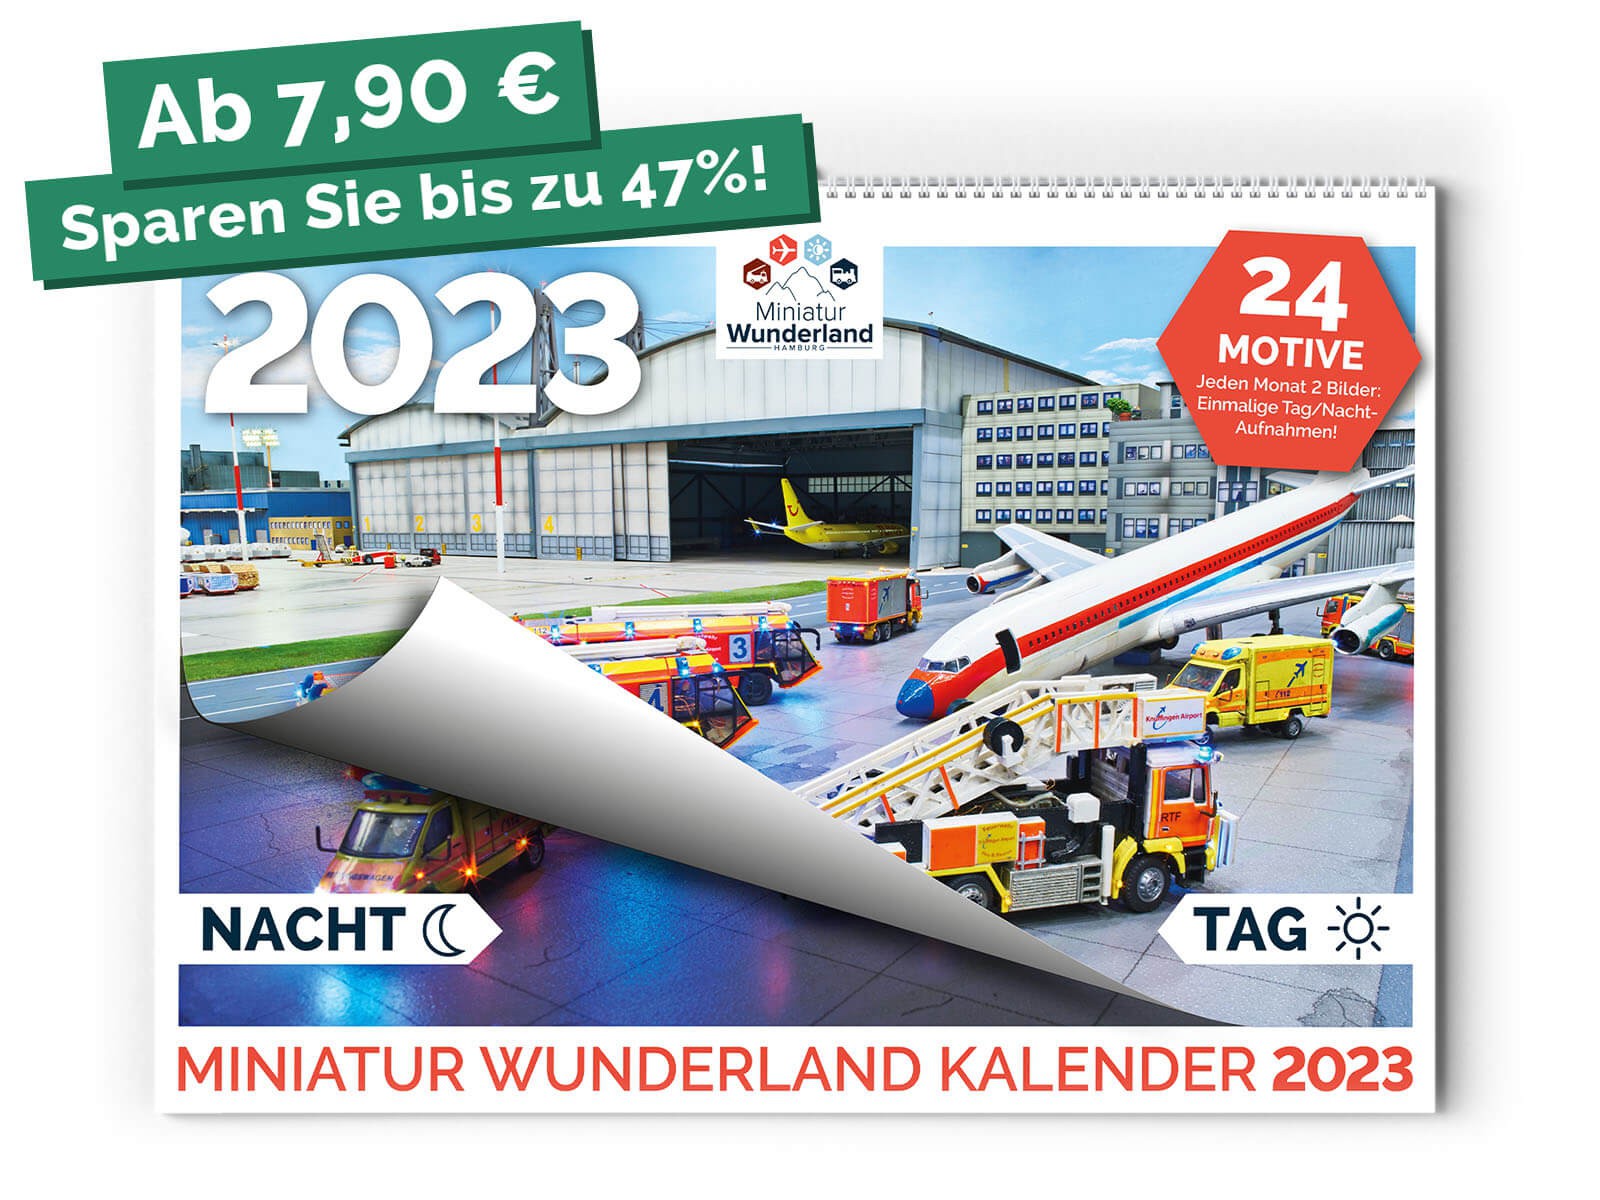 Miniatur Wunderland Calendar 2023